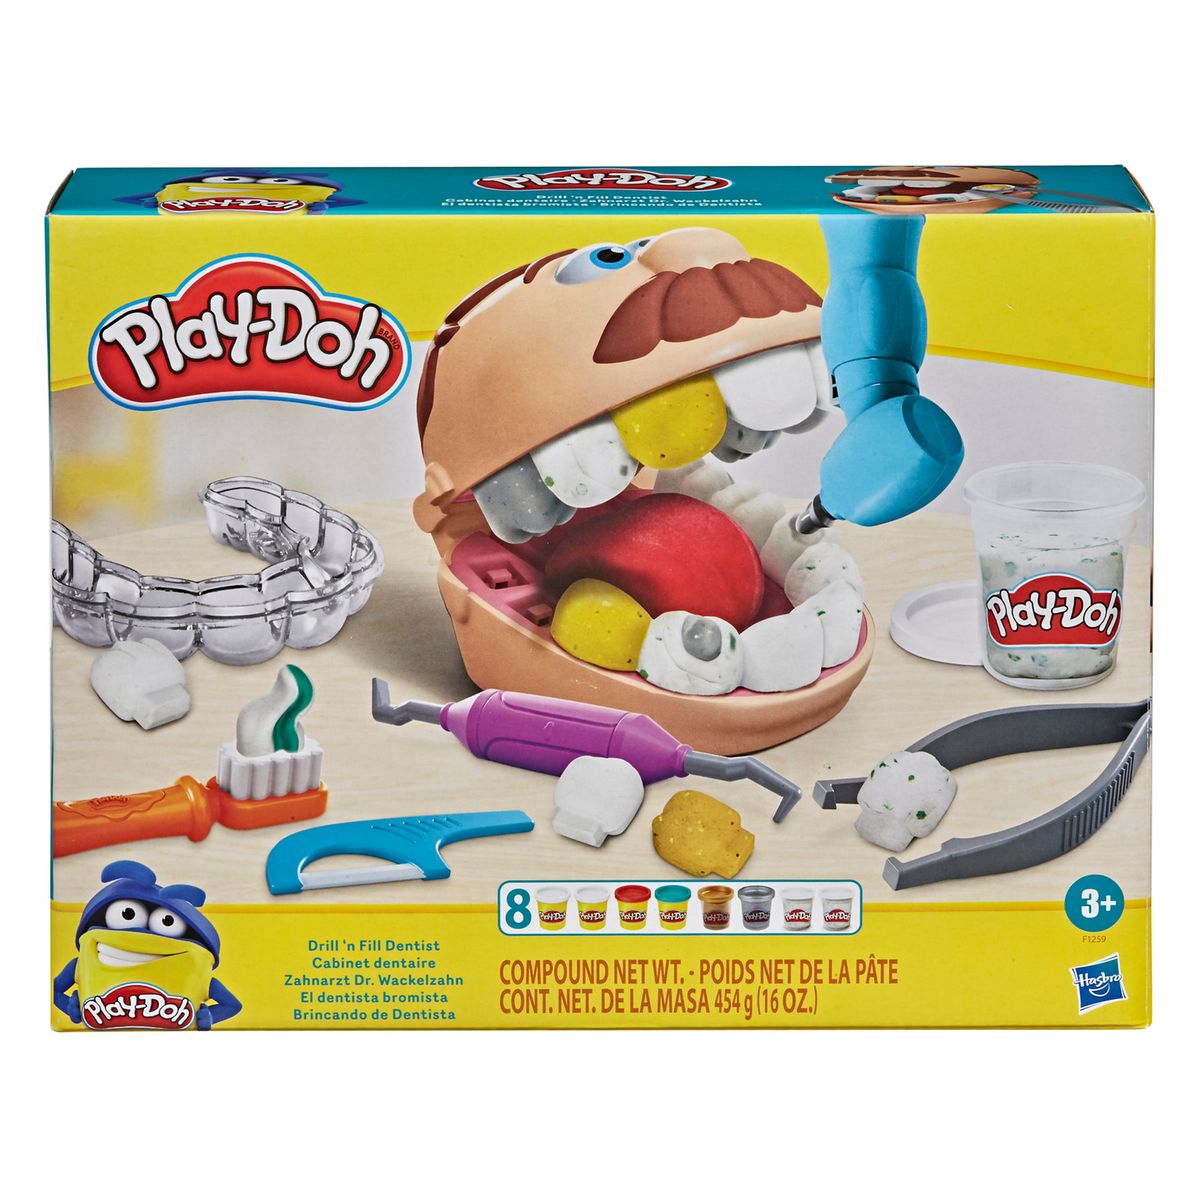 Play-doh cabinet dentaire multicolore Hasbro